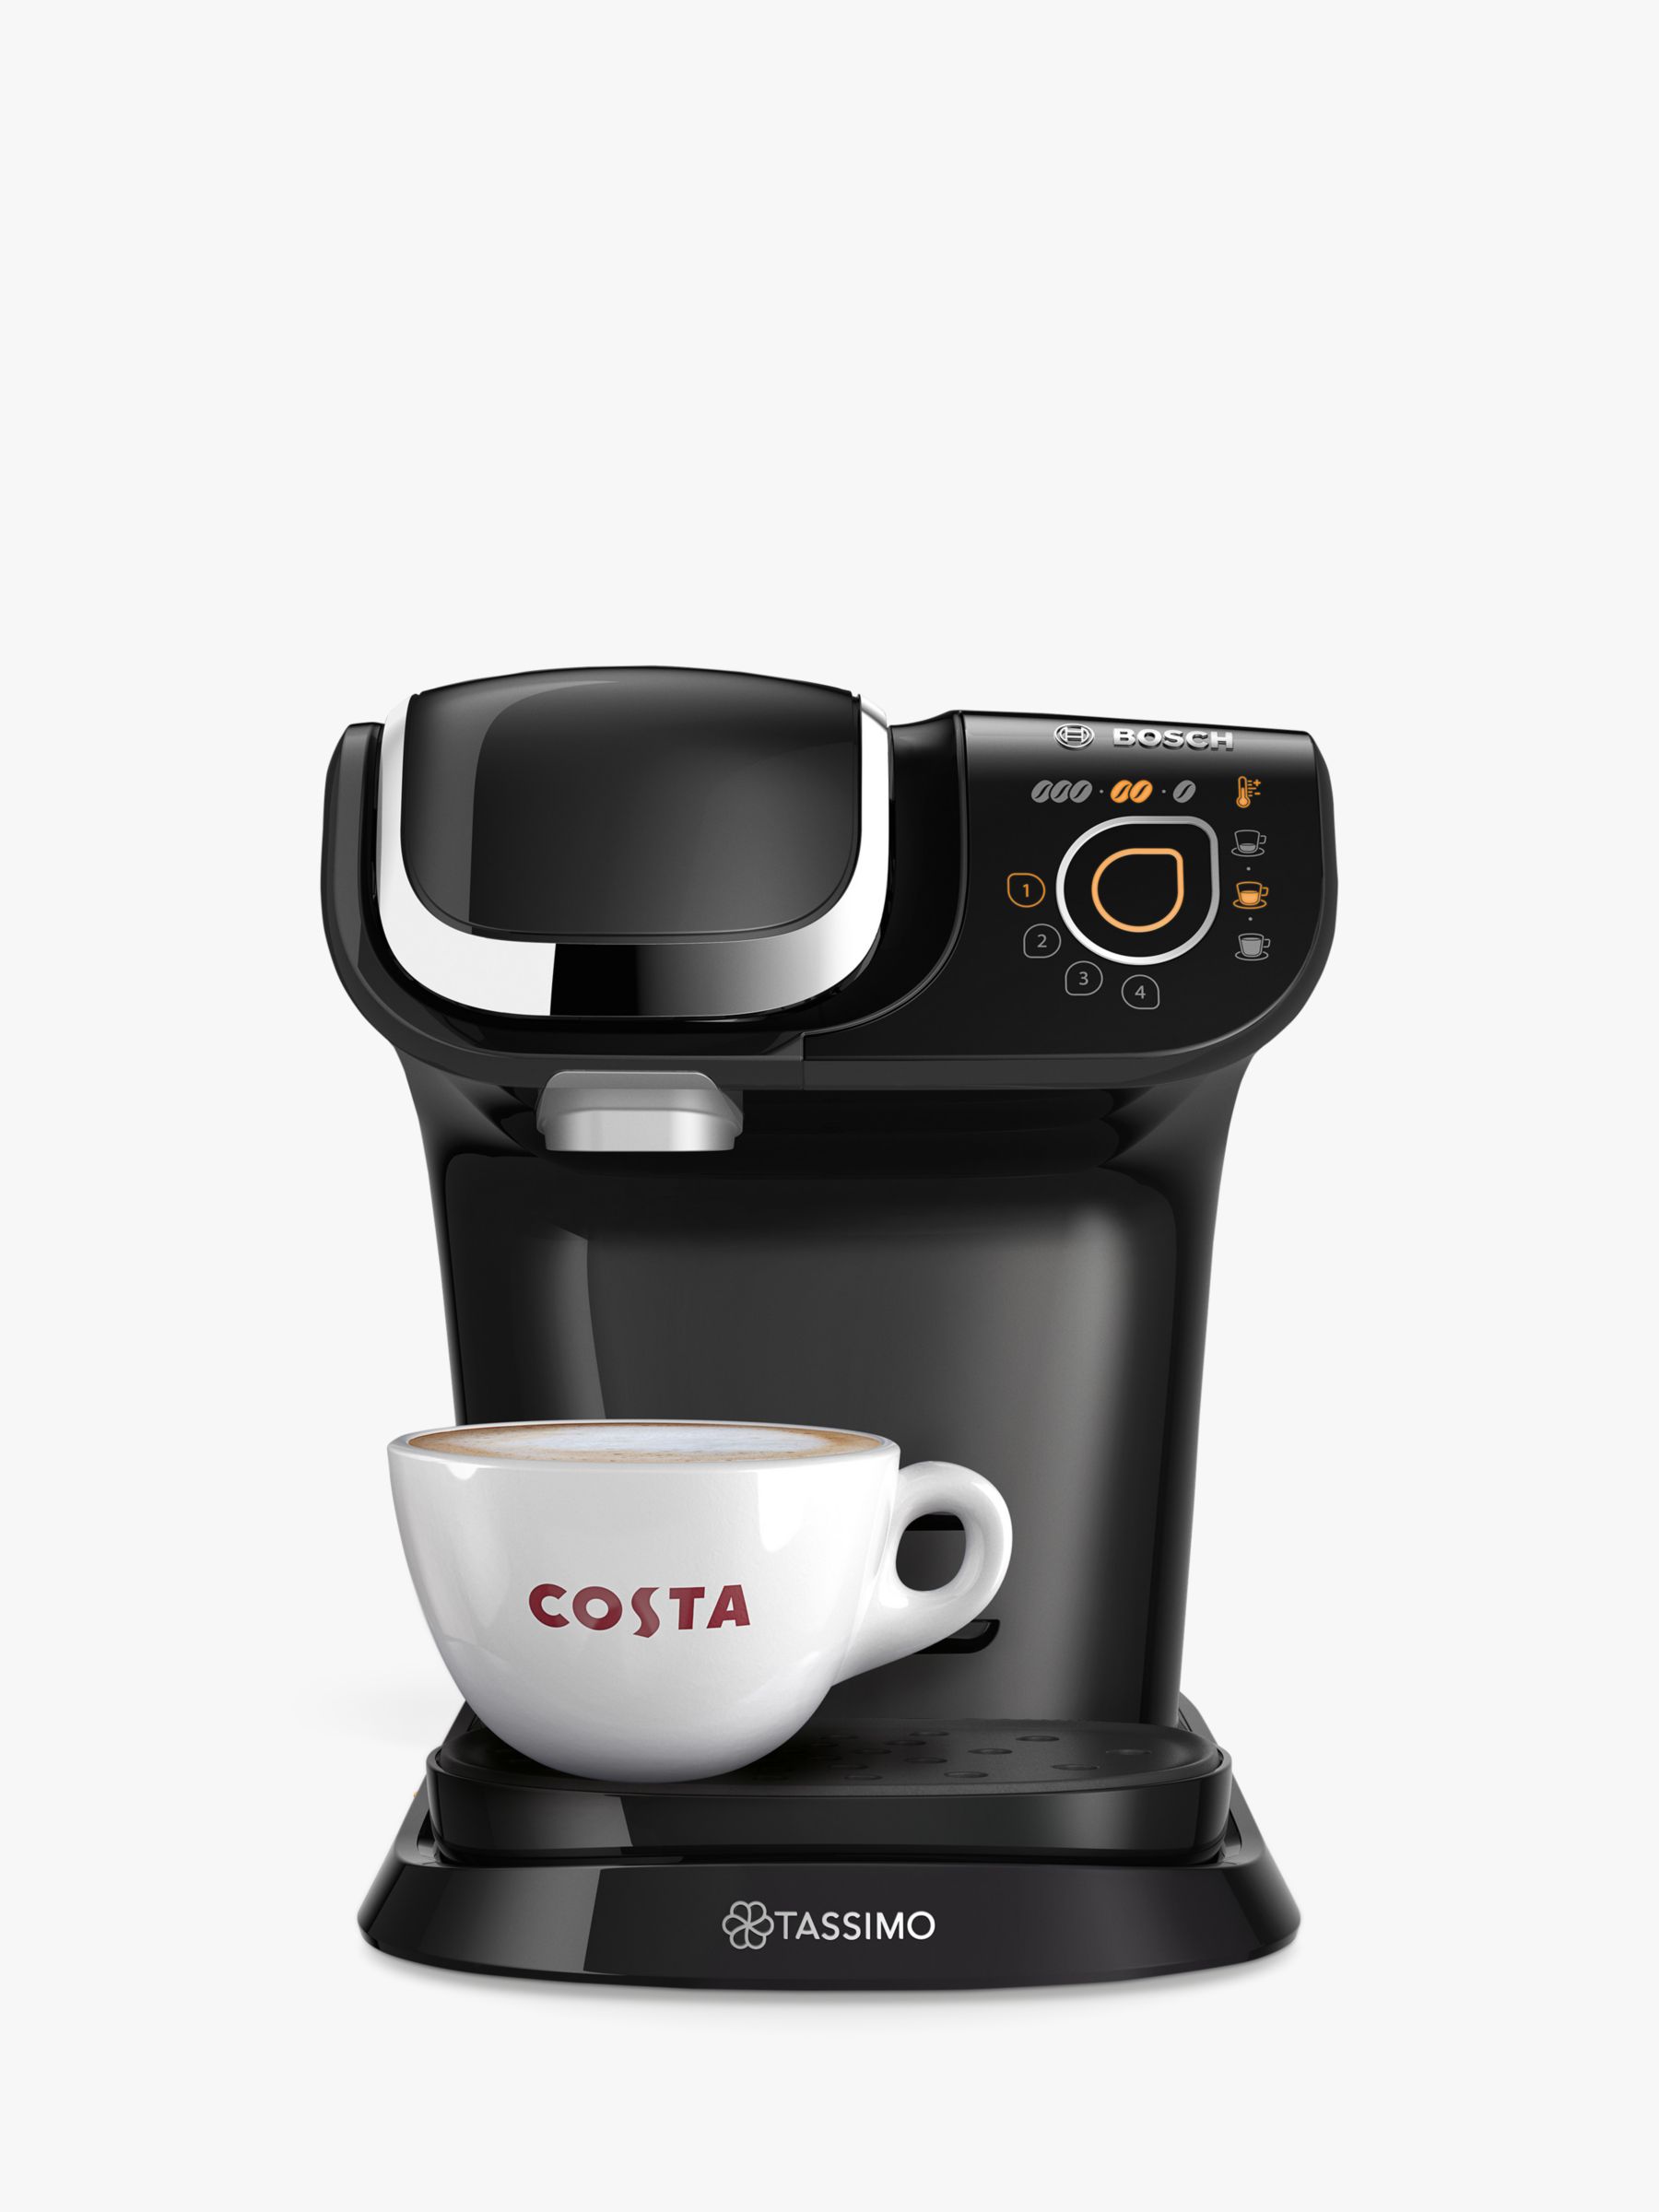 Bosch Tassimo Finesse coffee machine review